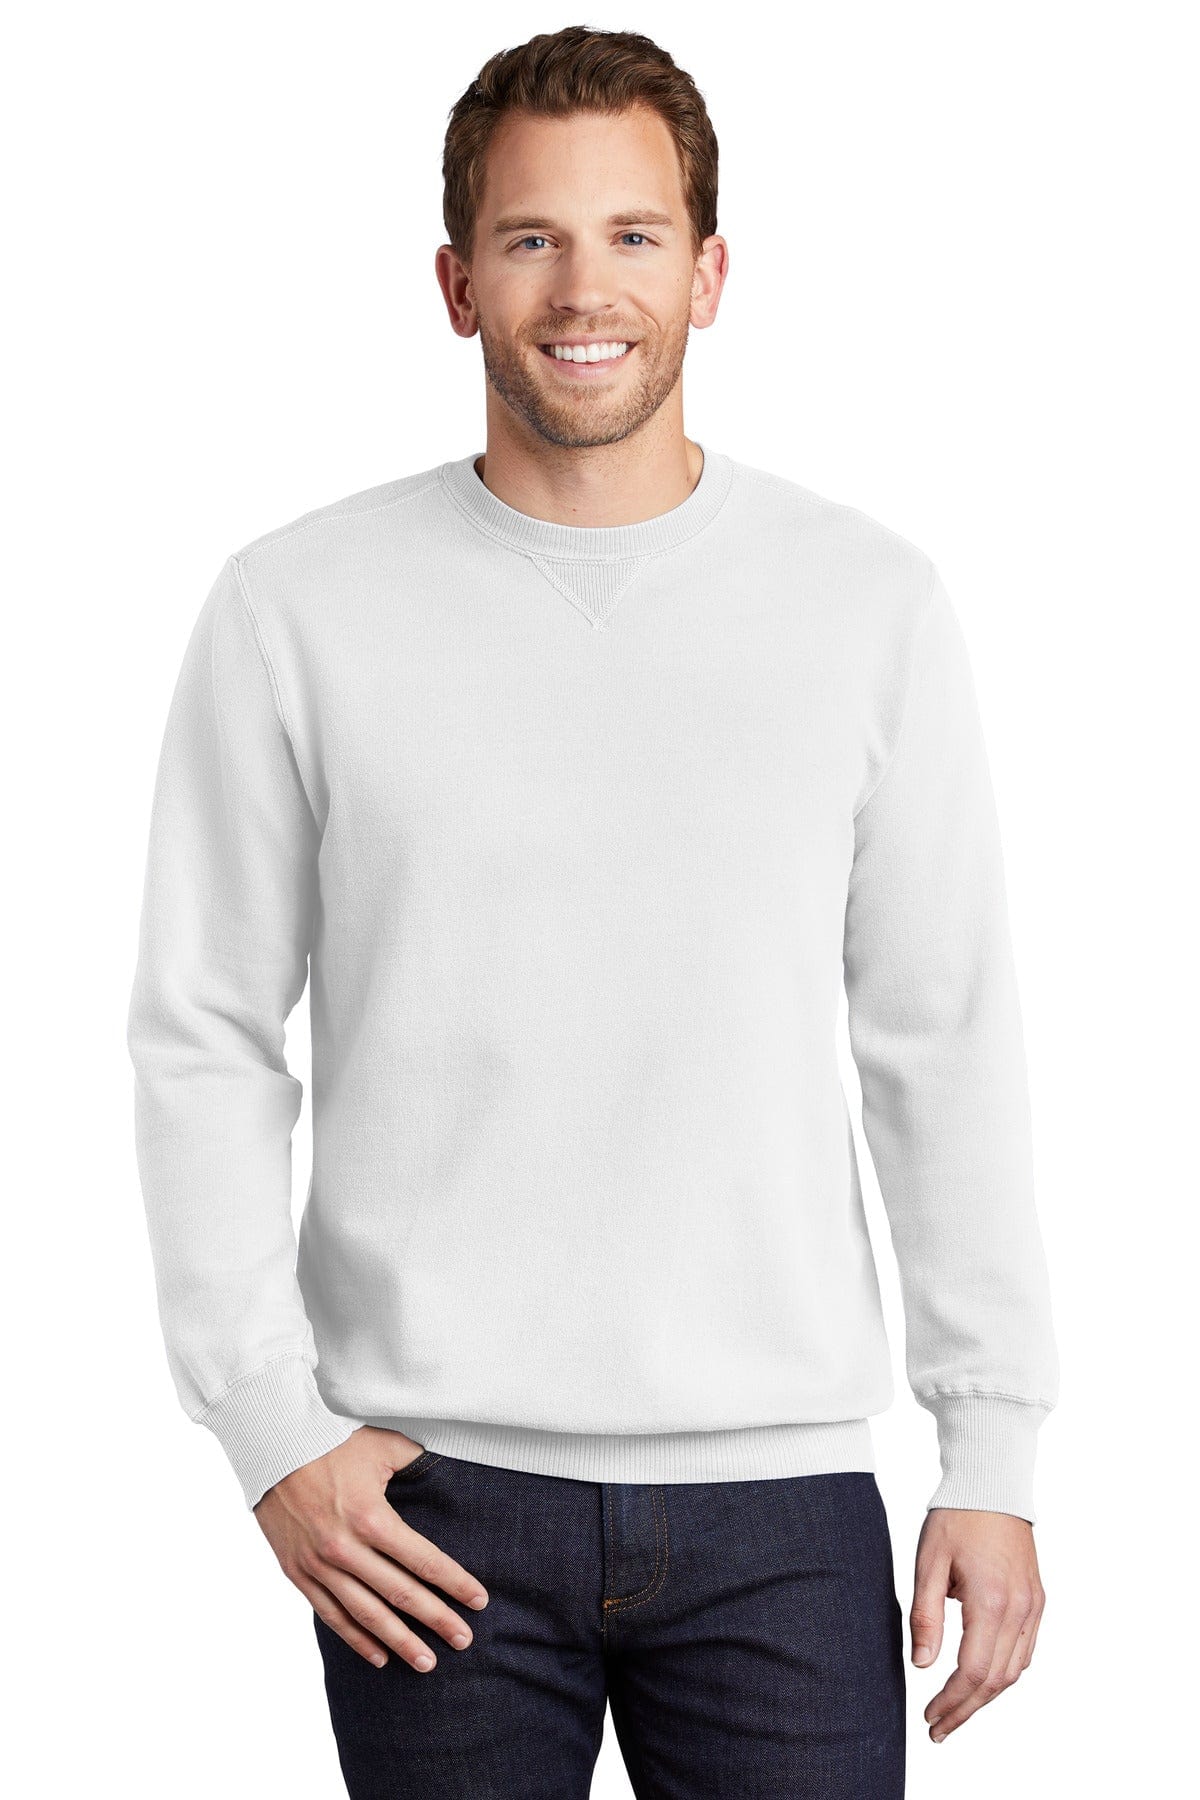 Port & Company ® Beach Wash ® Garment-Dyed Sweatshirt PC098, Basic Colors